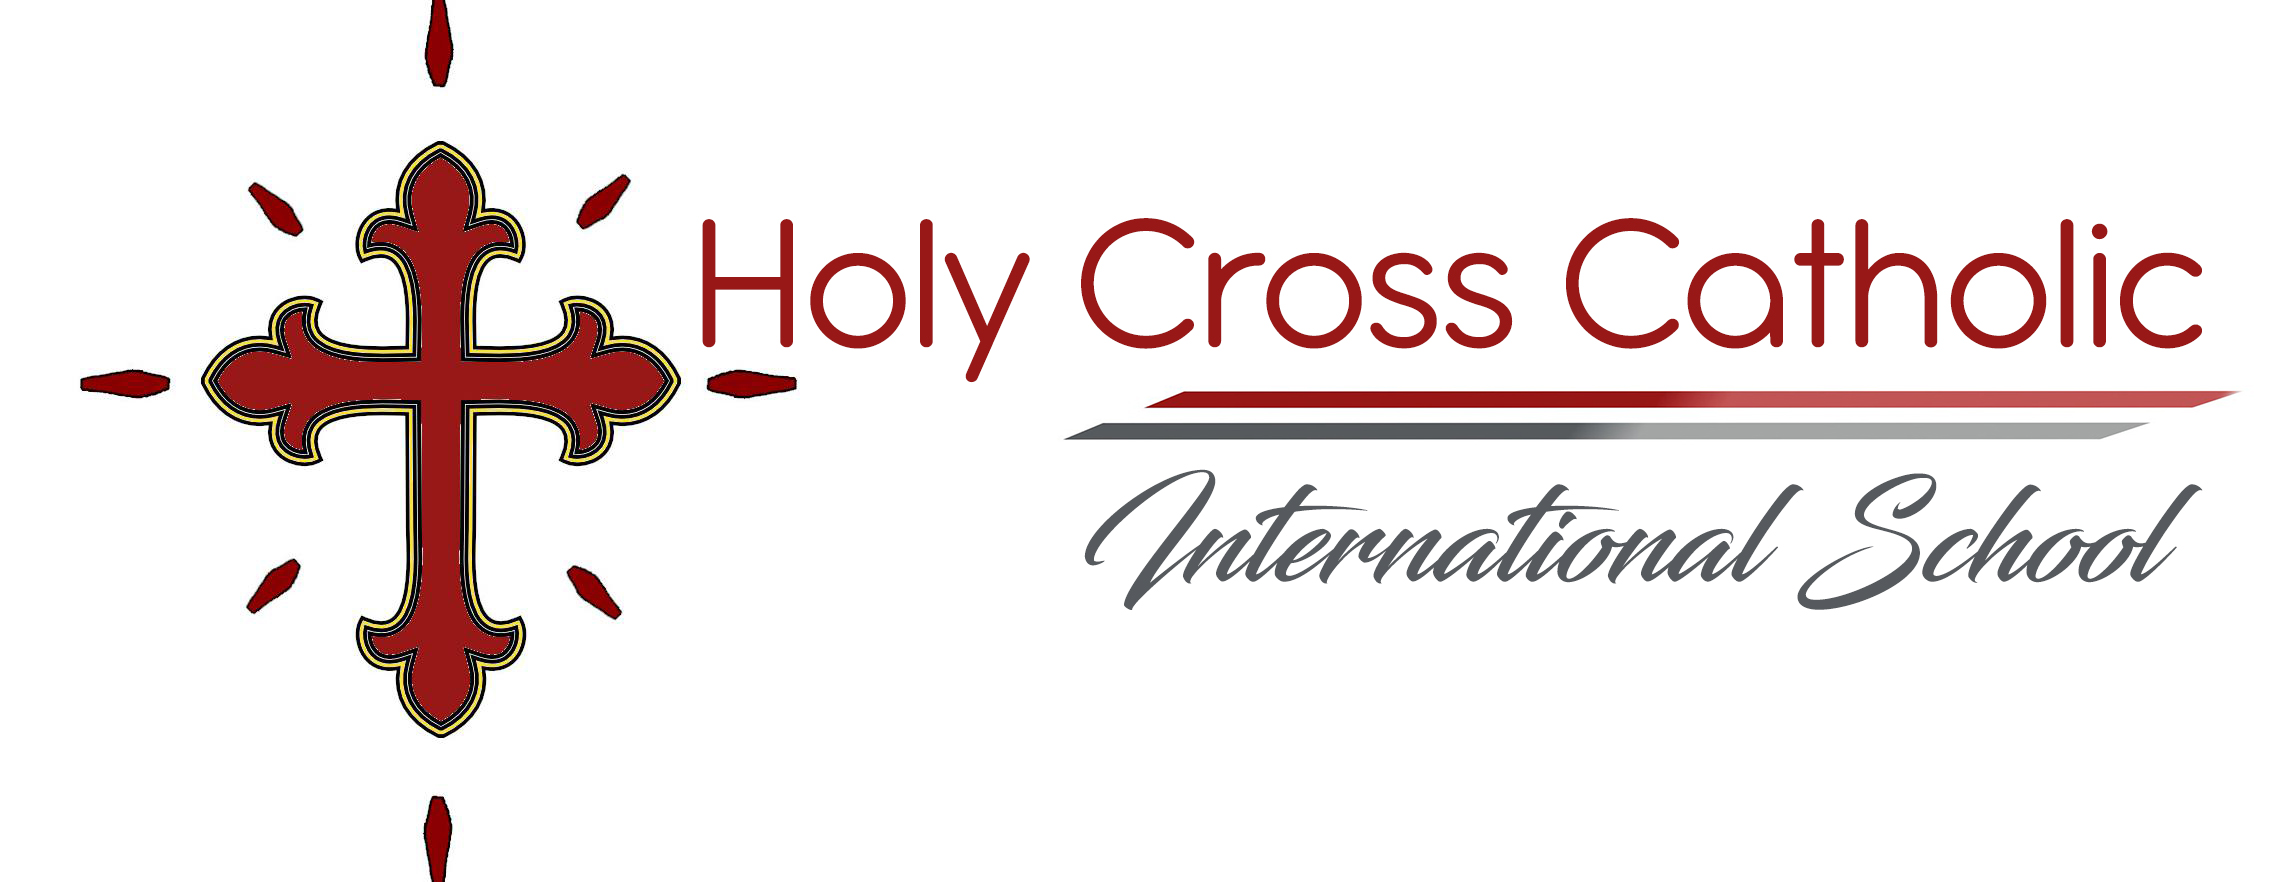 Holy Cross Catholic International School Logo